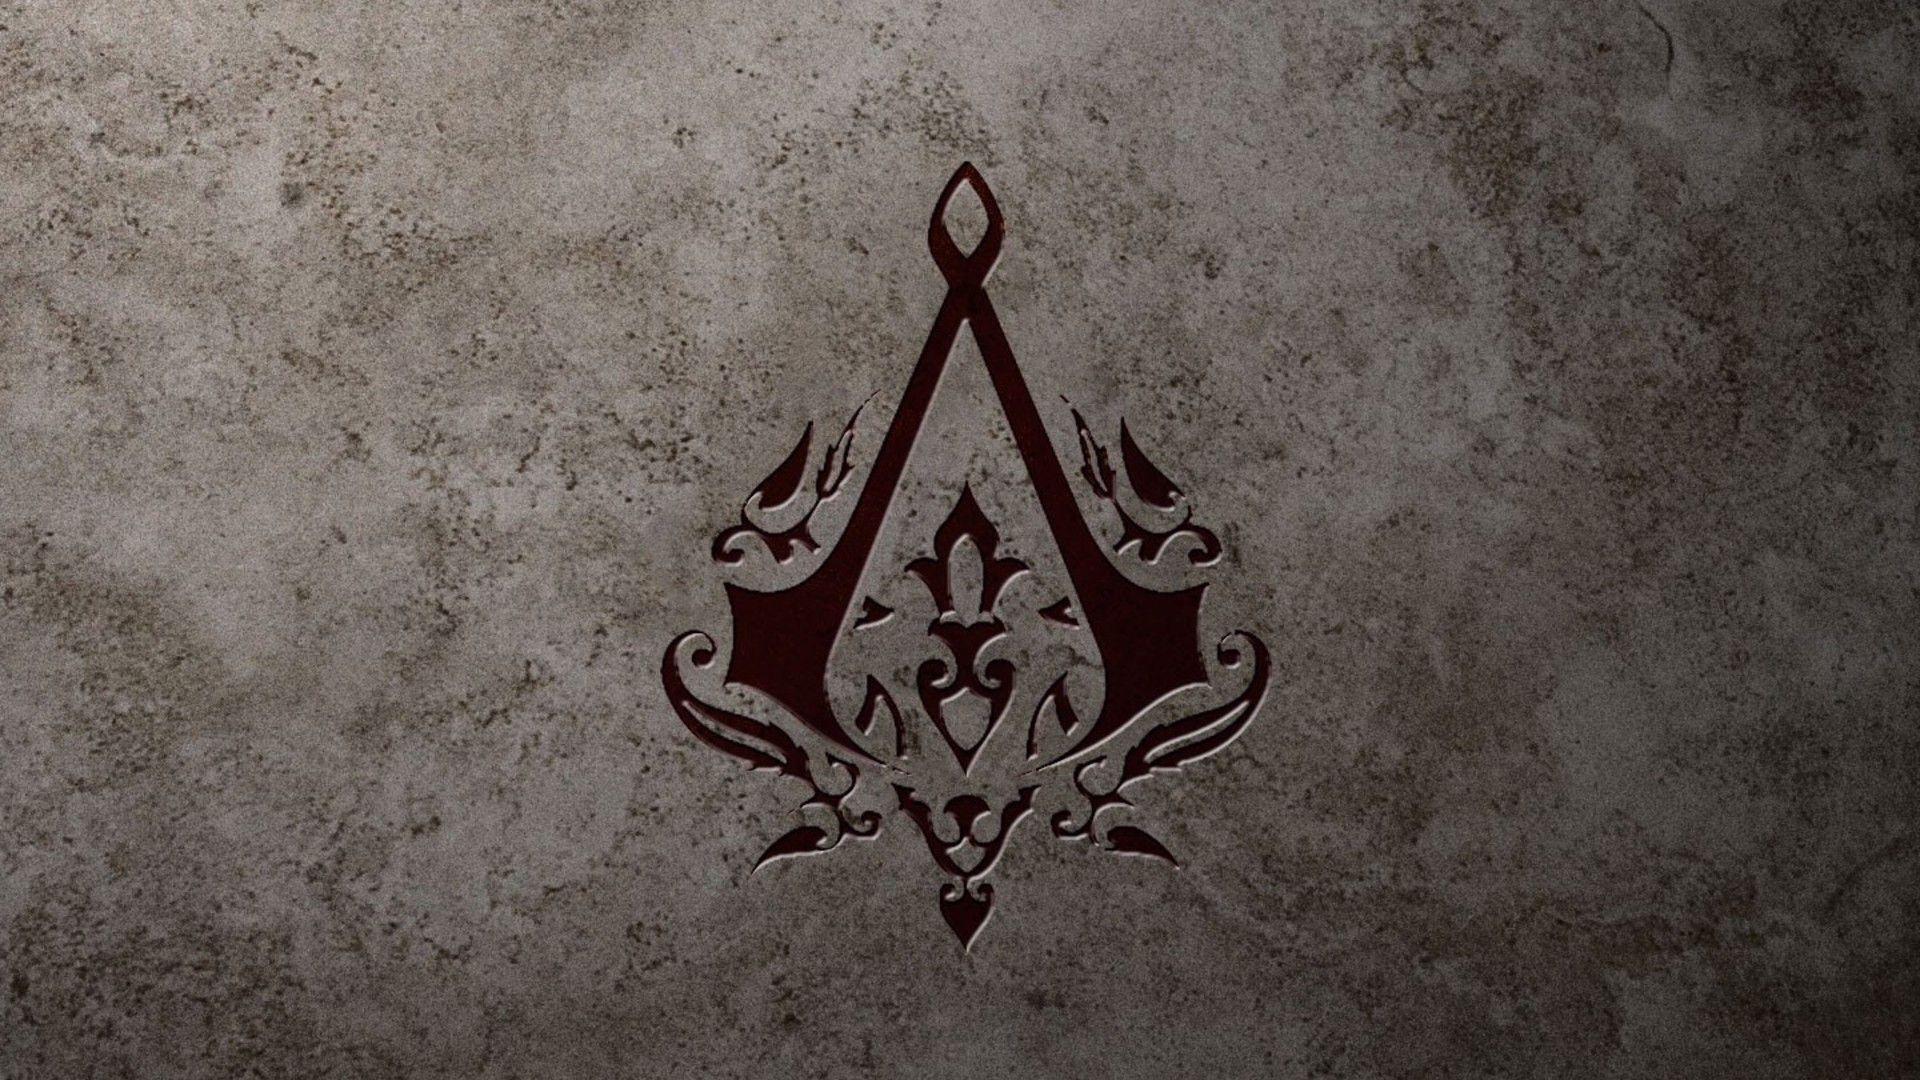 Assassins creed logos wallpapers